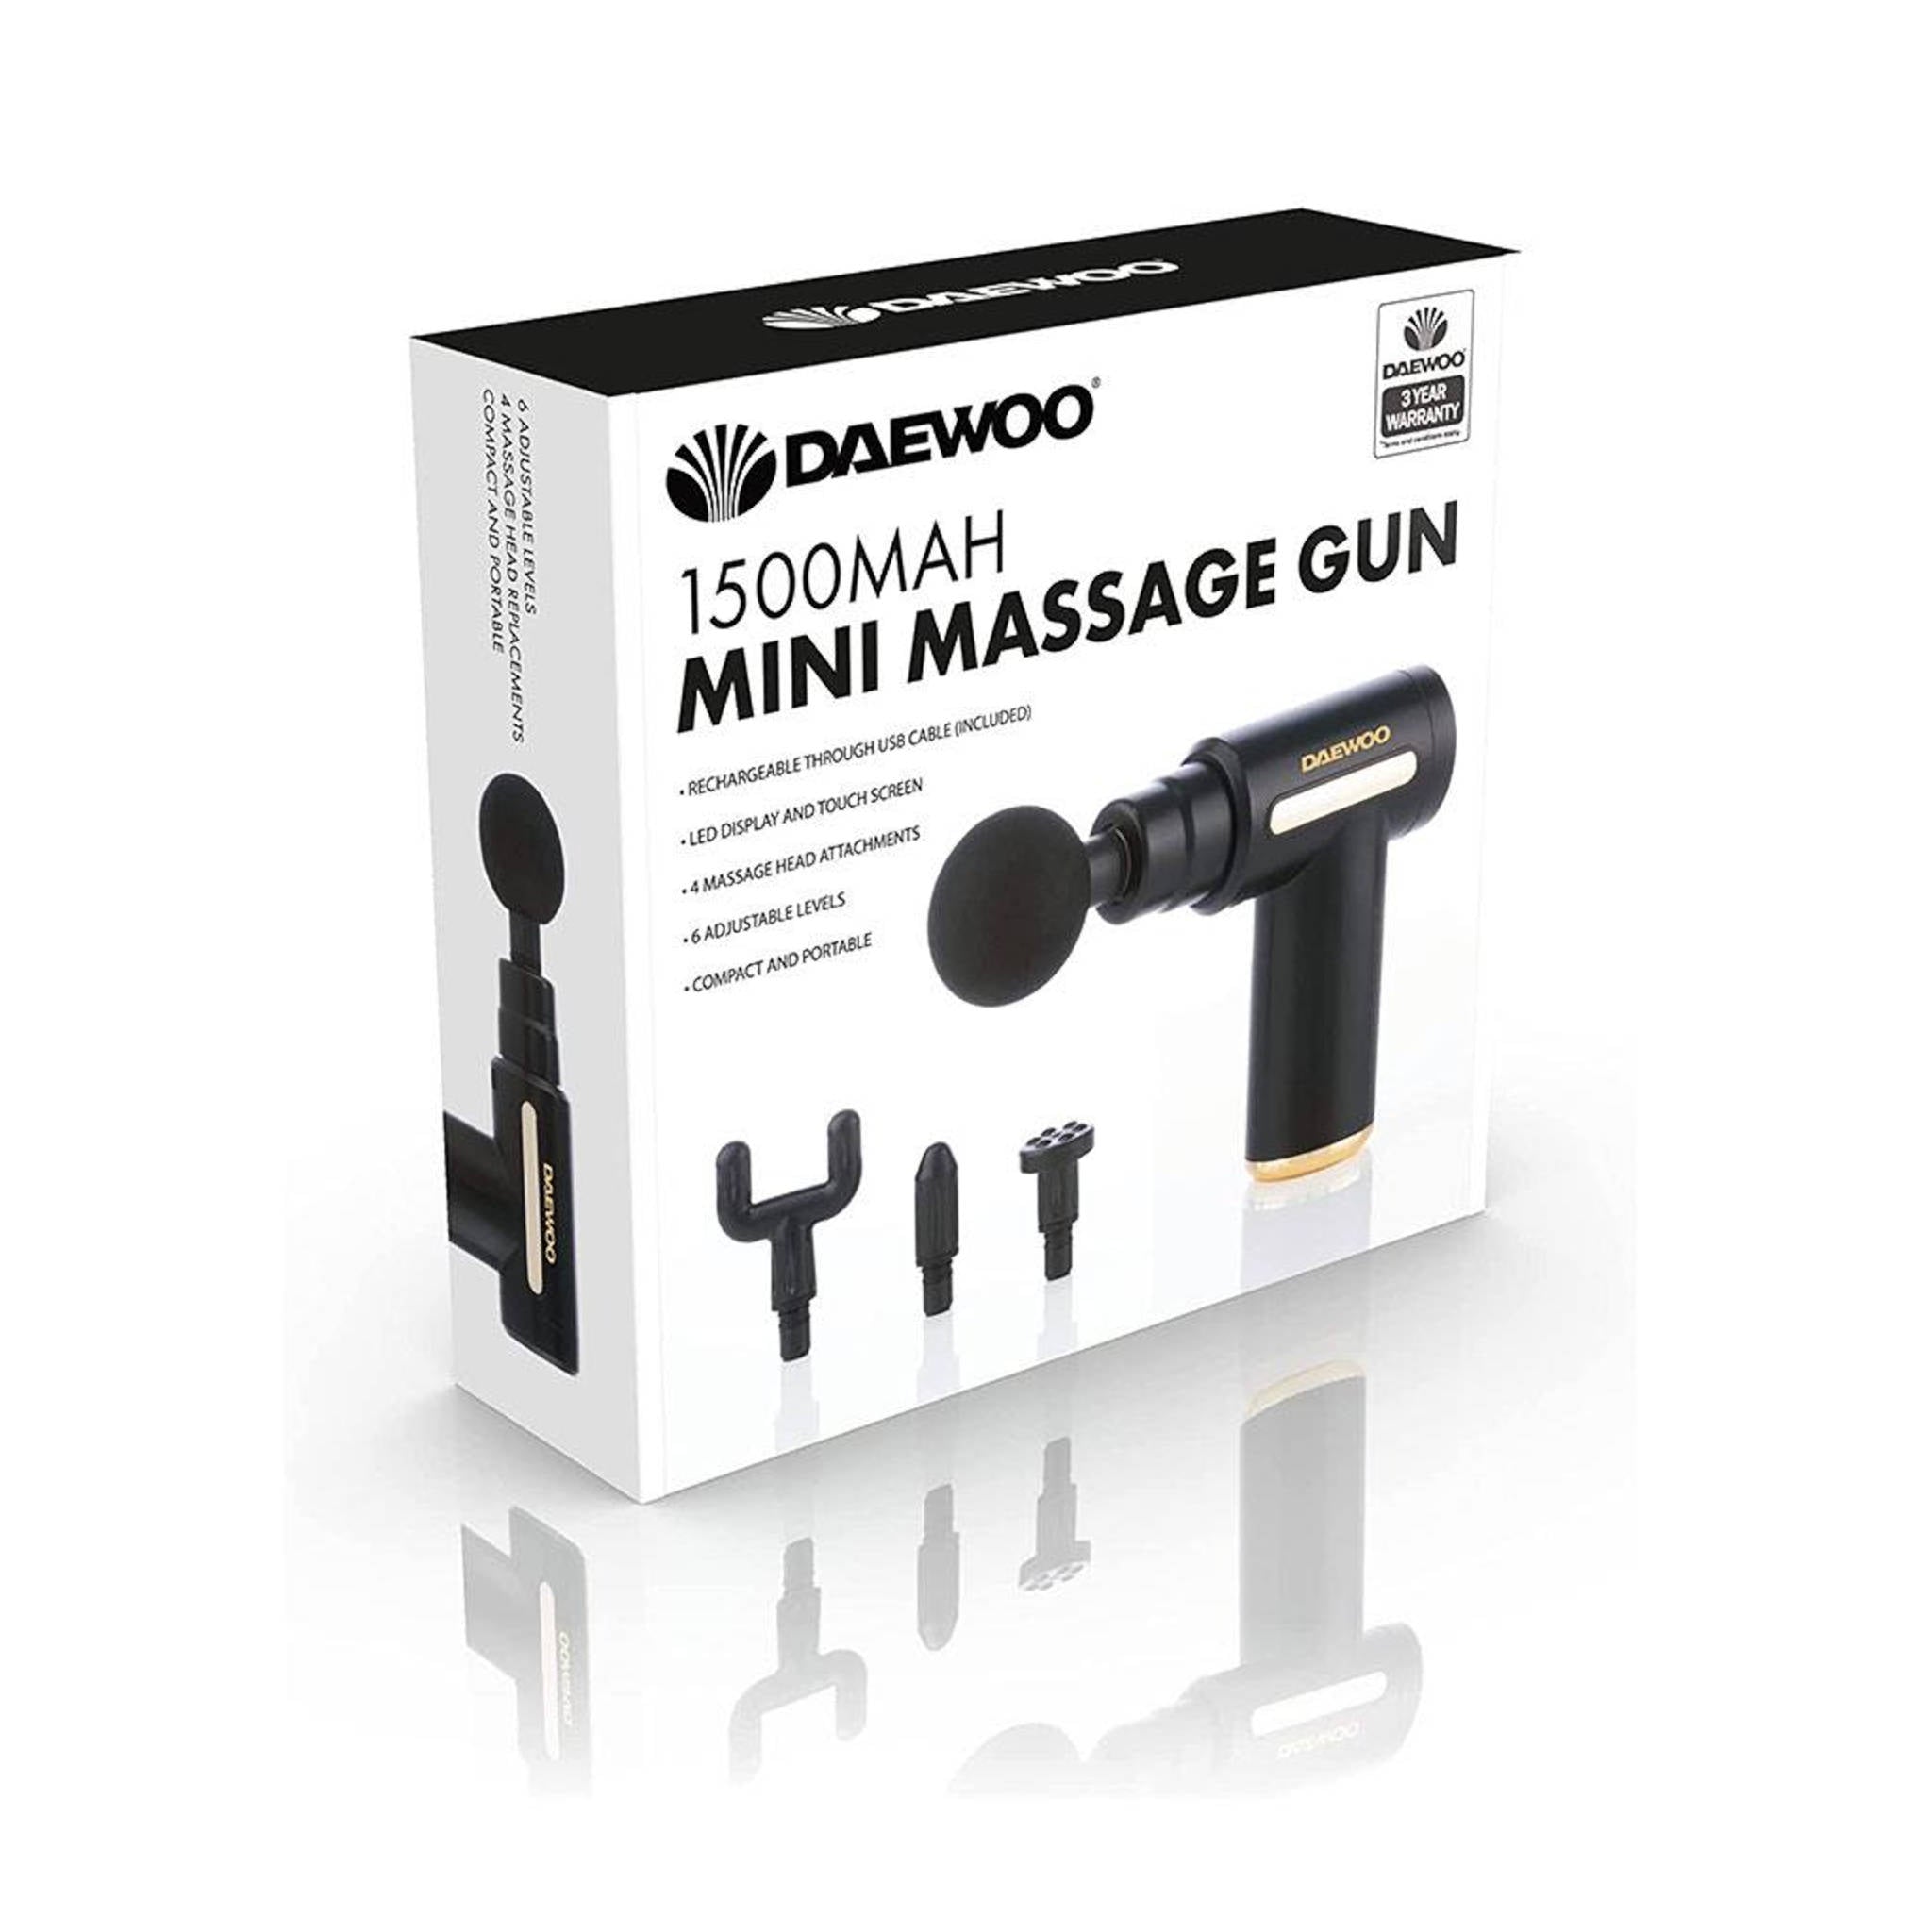 Daewoo 1500MAH Mini Massage Gun with LED Screen